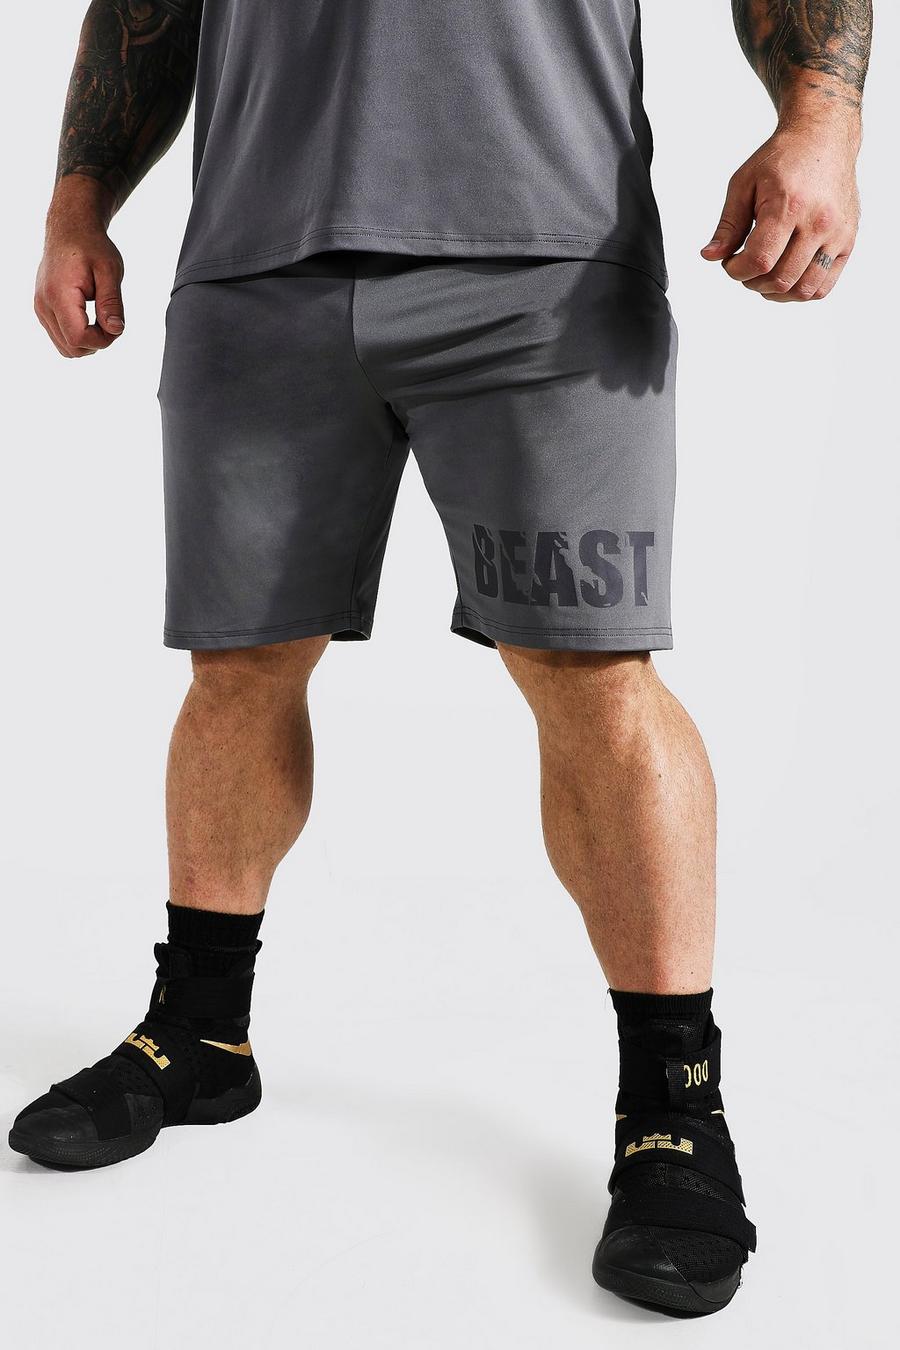 Pantaloncini Man Active x Beast per alta performance, Charcoal grey image number 1